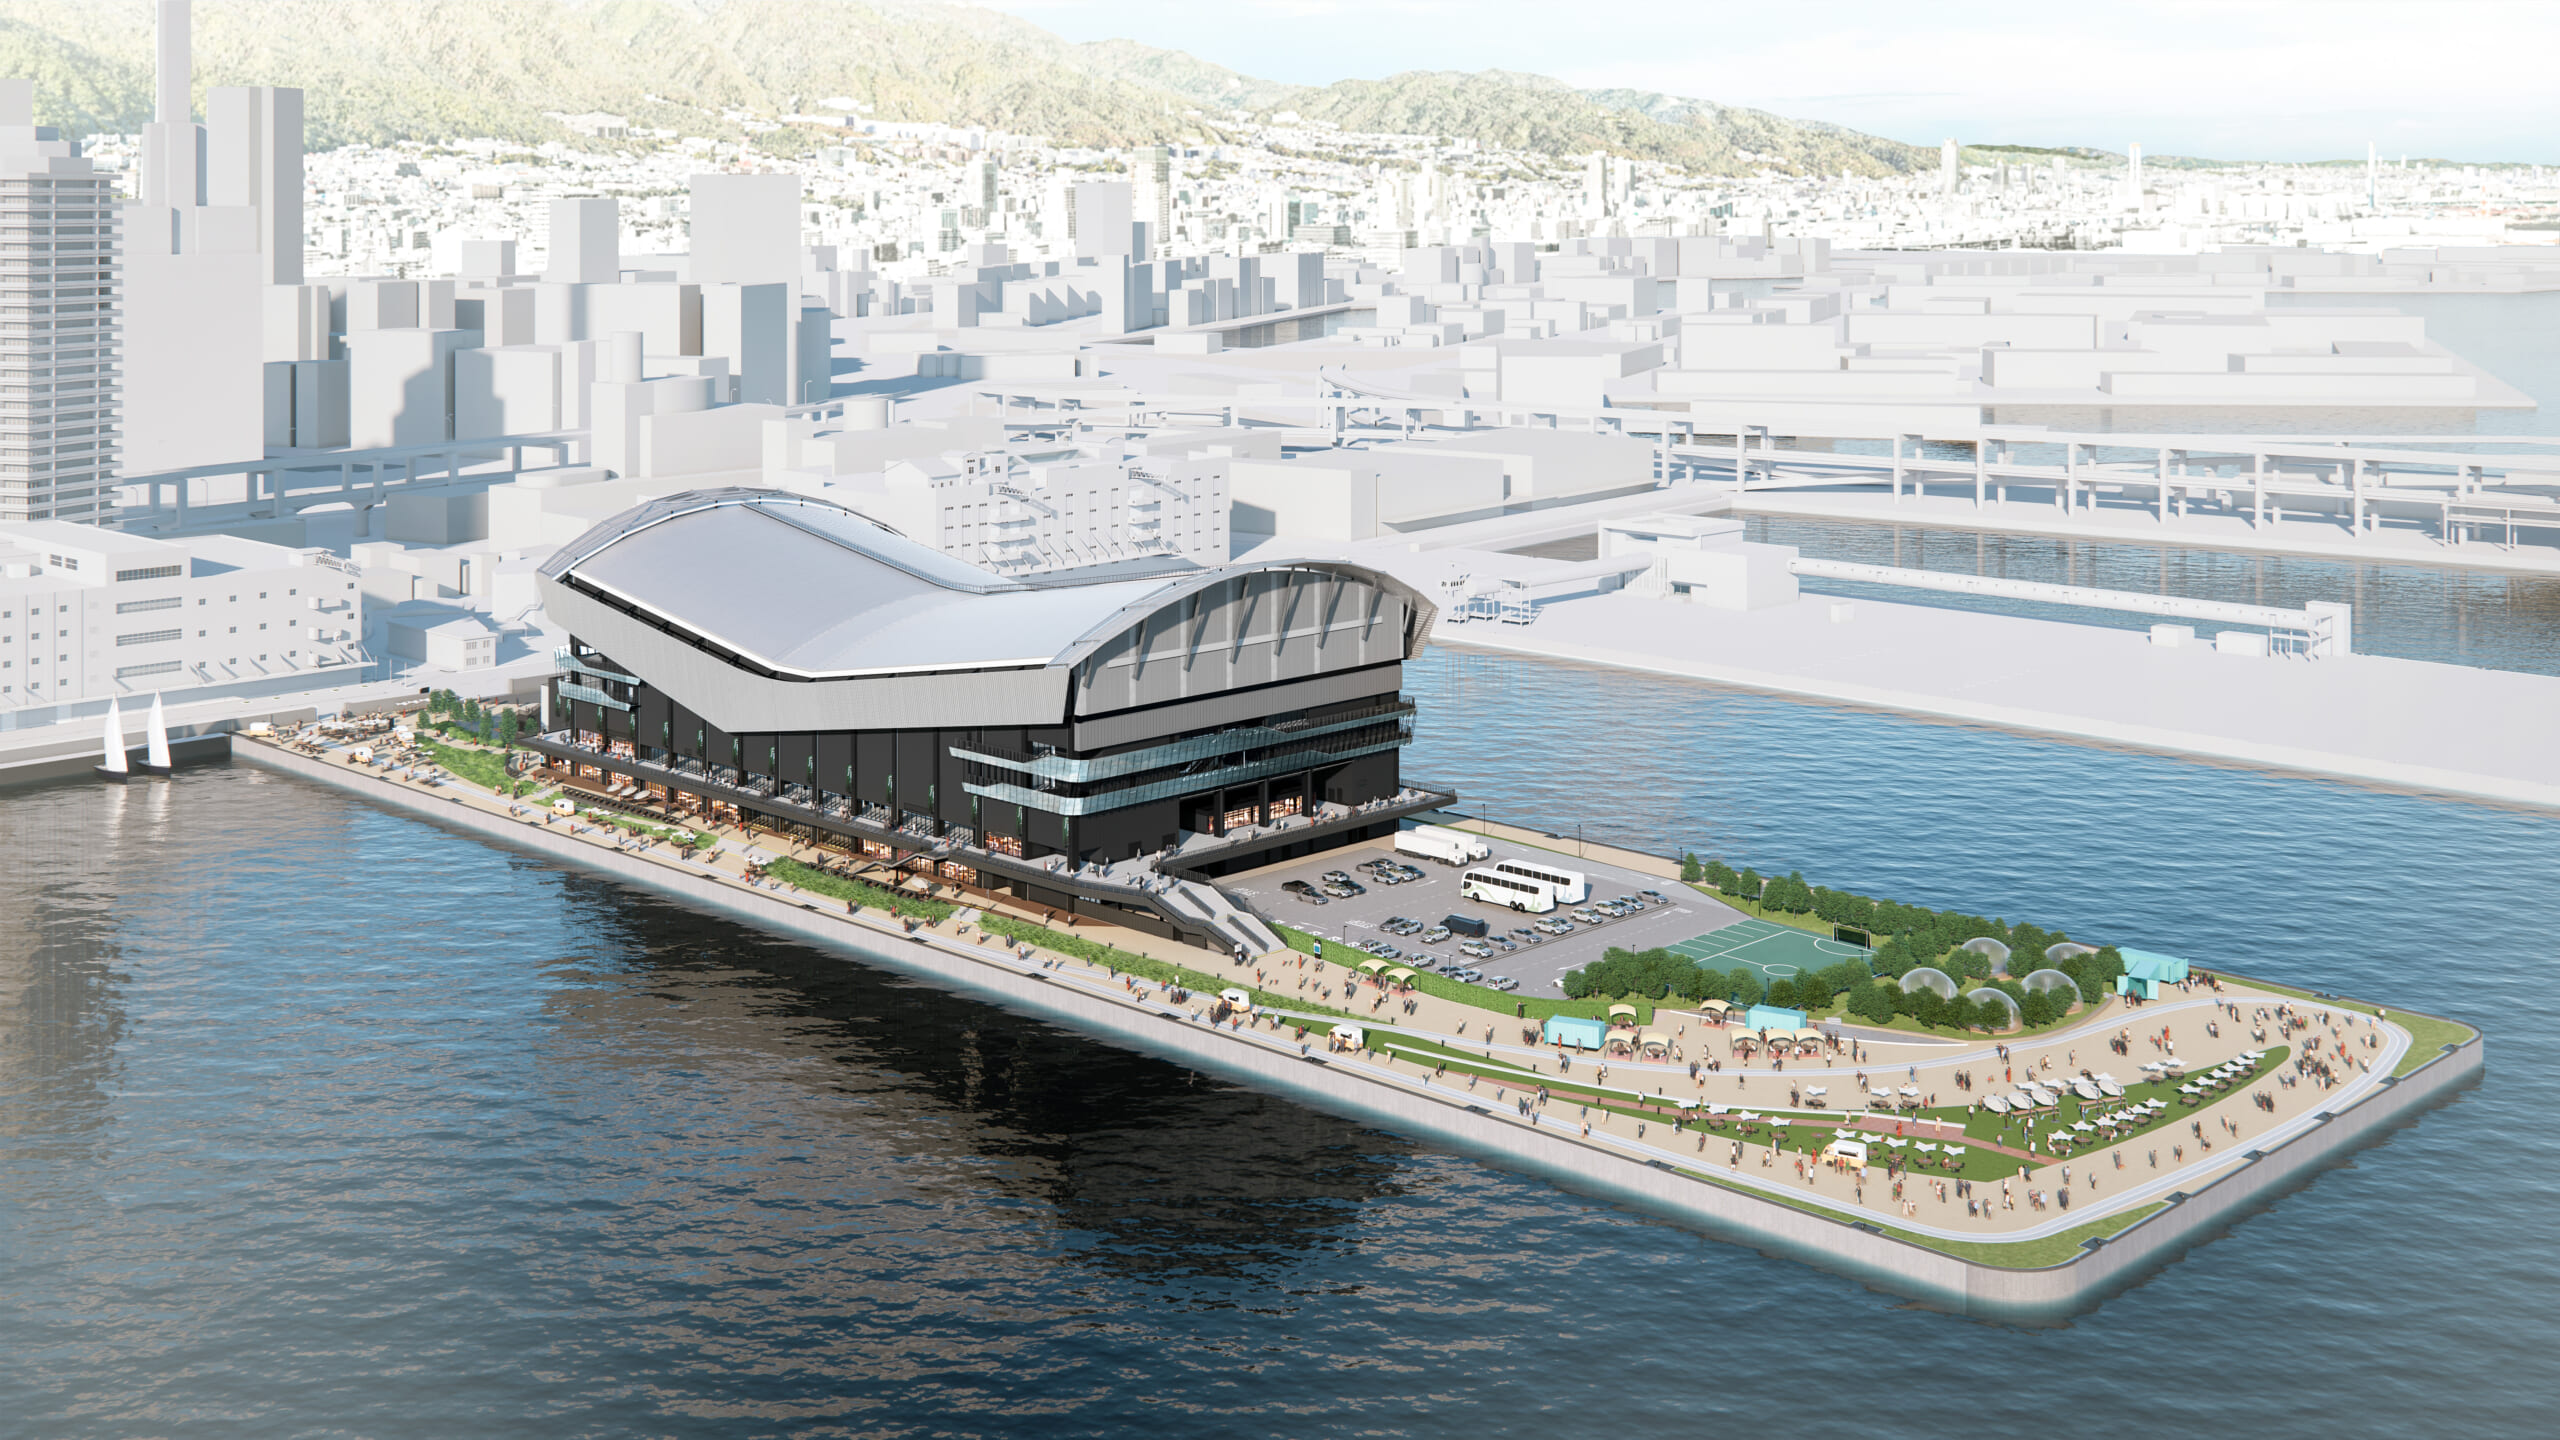 NHKにて紹介されました「神戸港の多目的アリーナ 建設工事始まり安全祈願祭を実施」